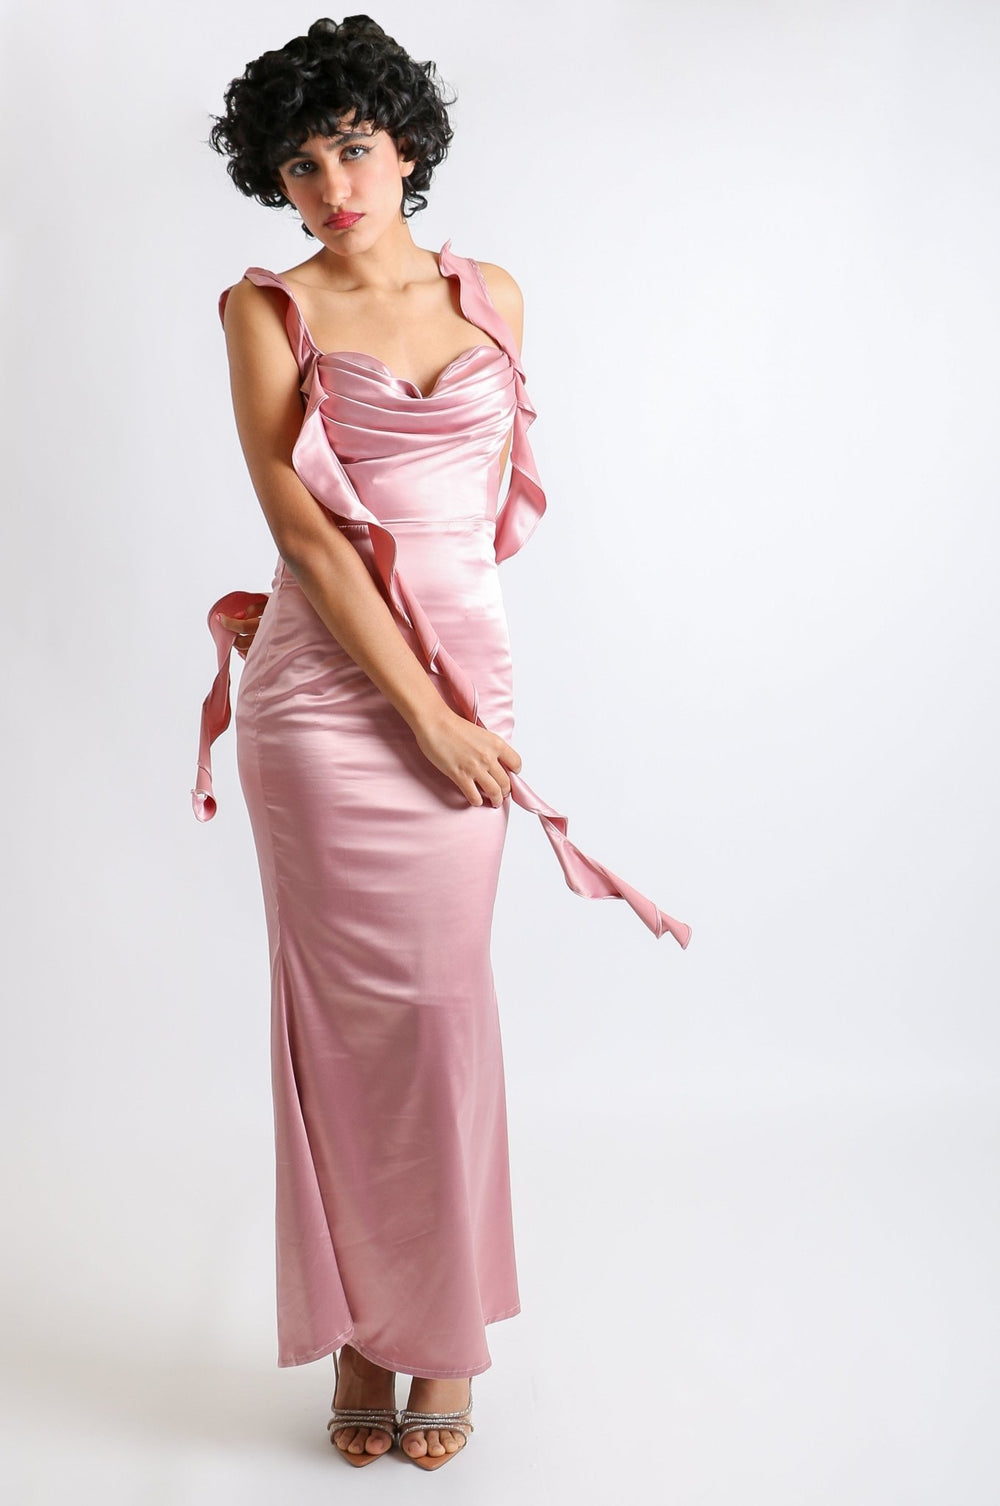 Macarena - rosa - Lend the Trend renta de vestidos mexico